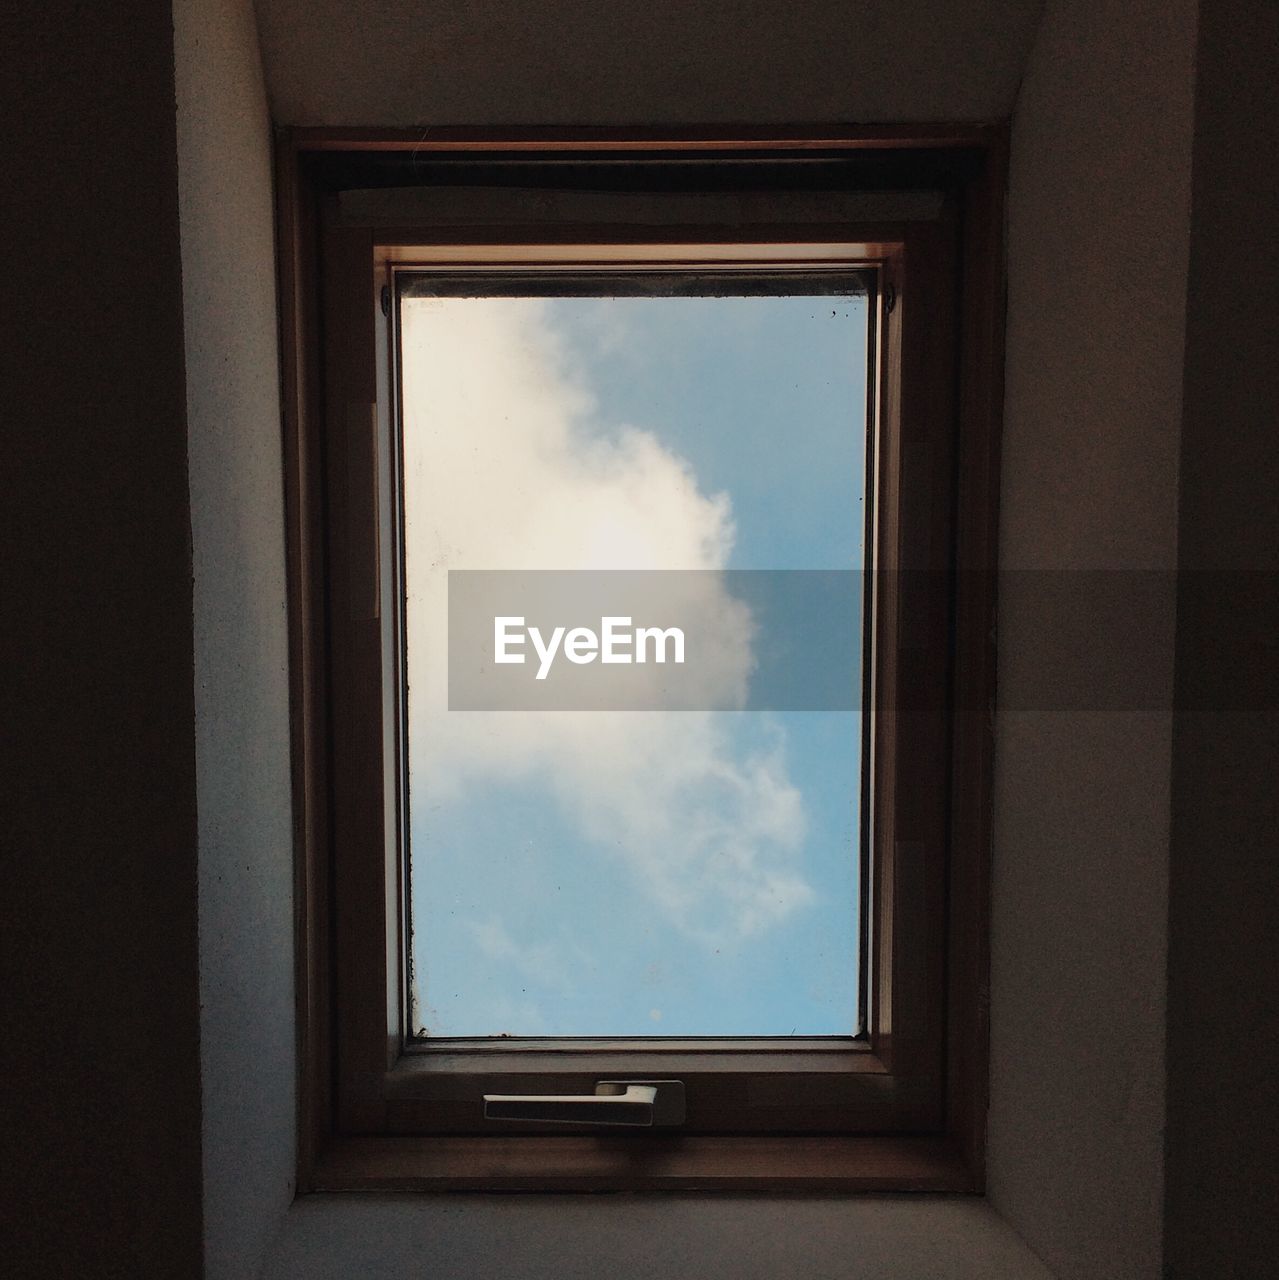 View of sky through window